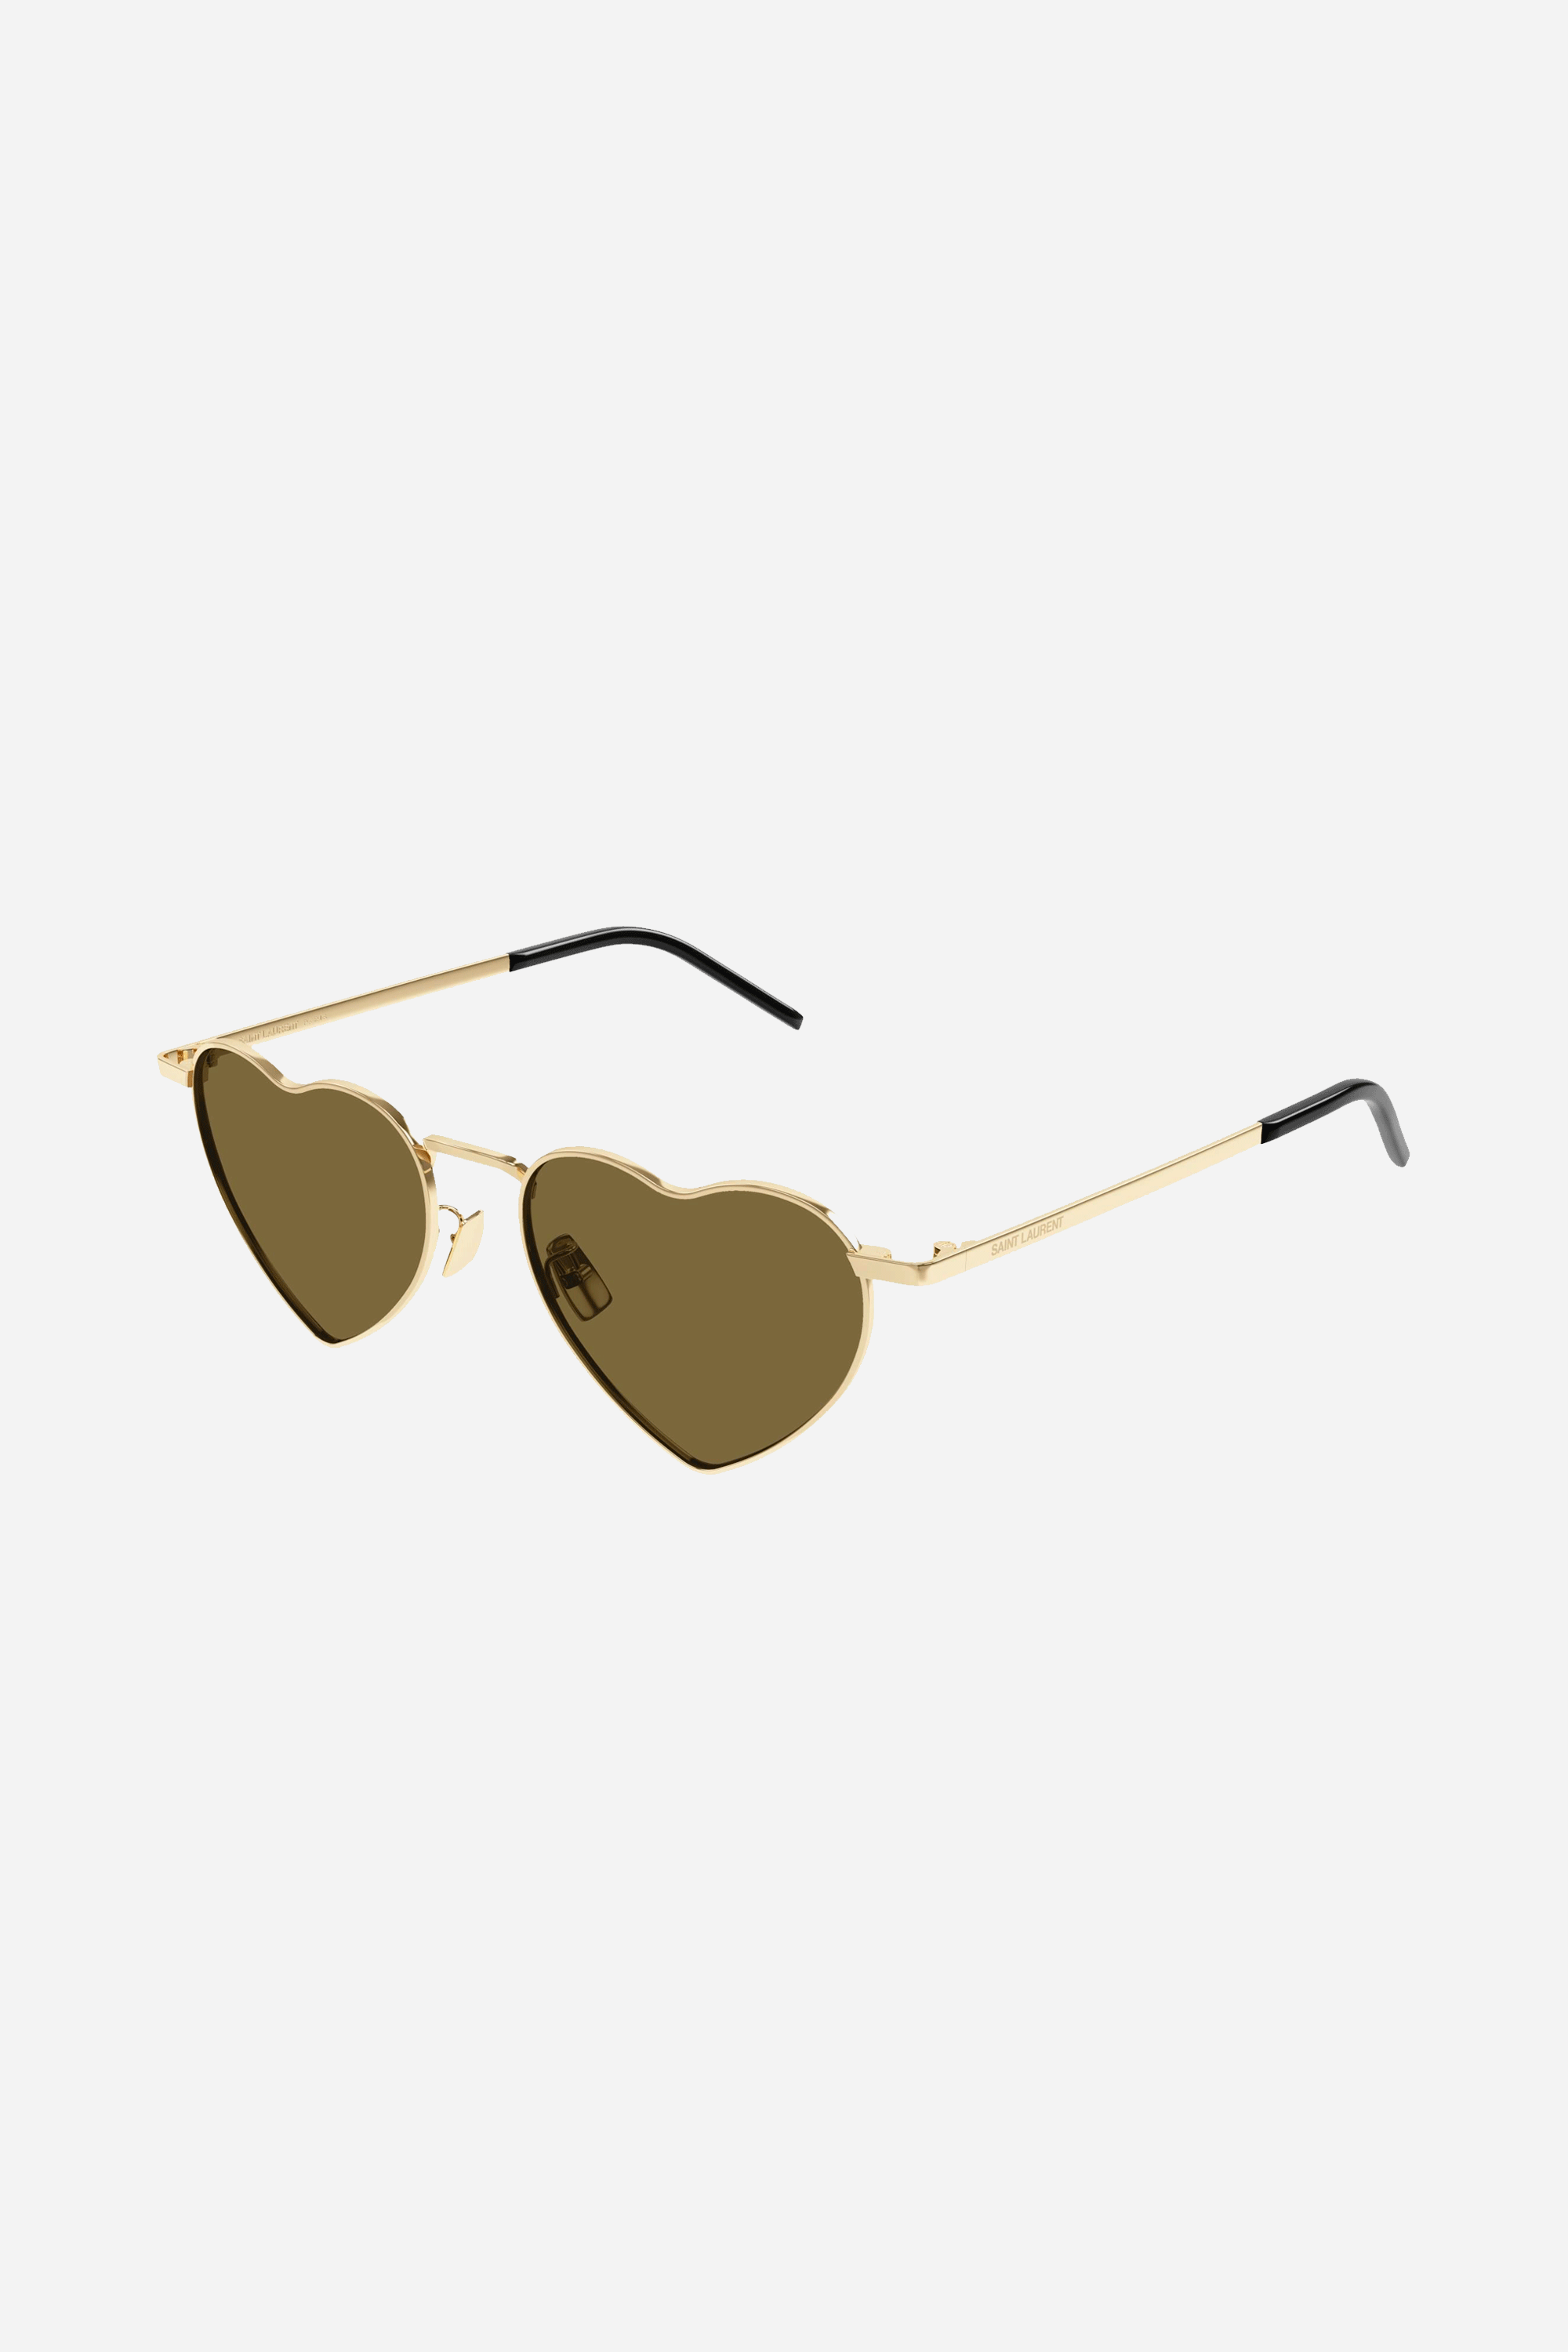 Saint Laurent iconic Lou Lou metal brown sunglasses - Eyewear Club